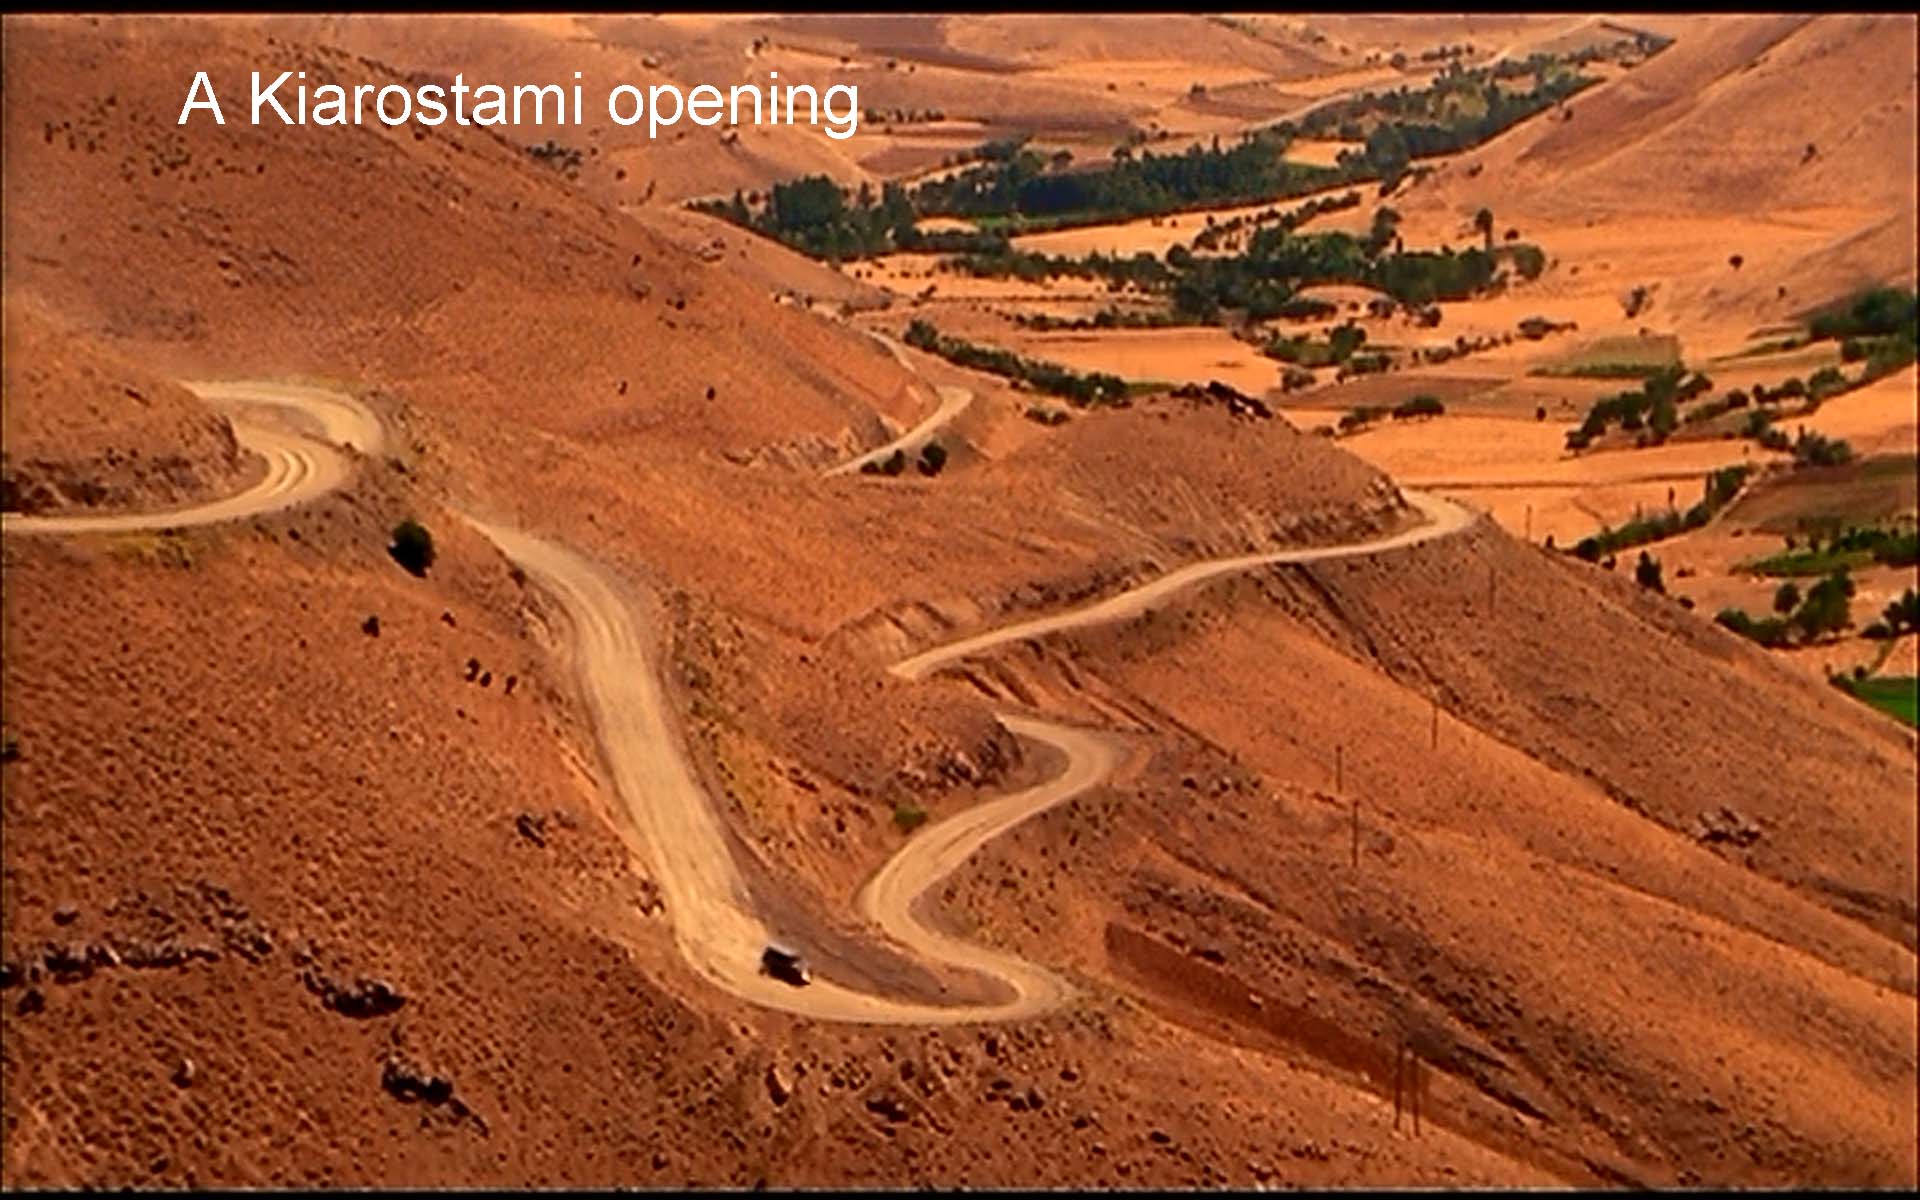  A Kiarostami opening